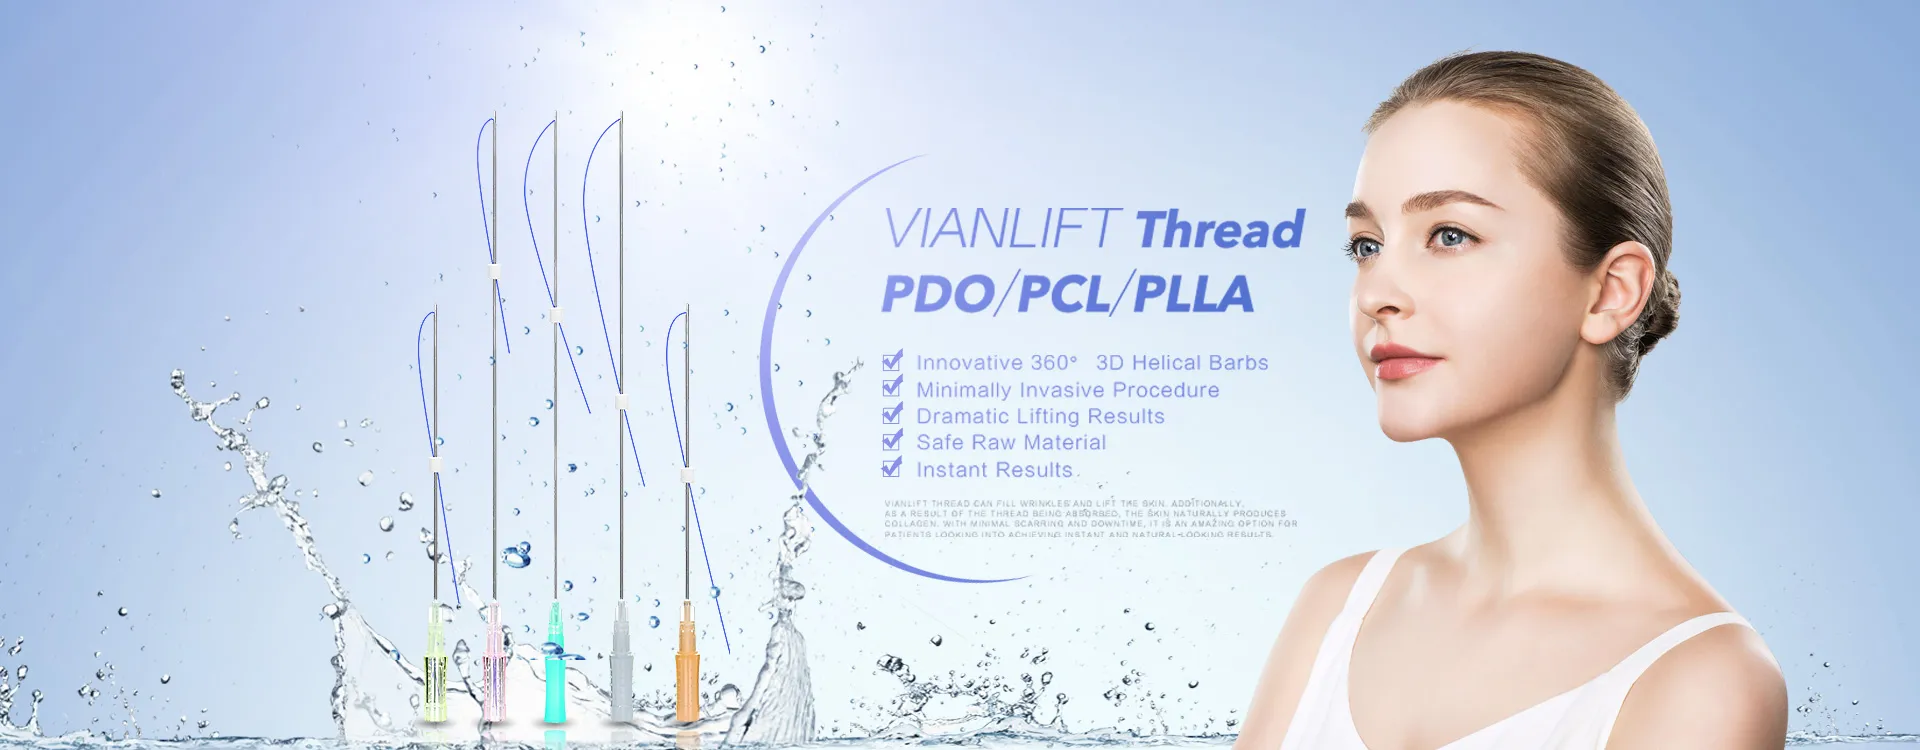 VIANLIFT Thread PDO/PCL/PLLA